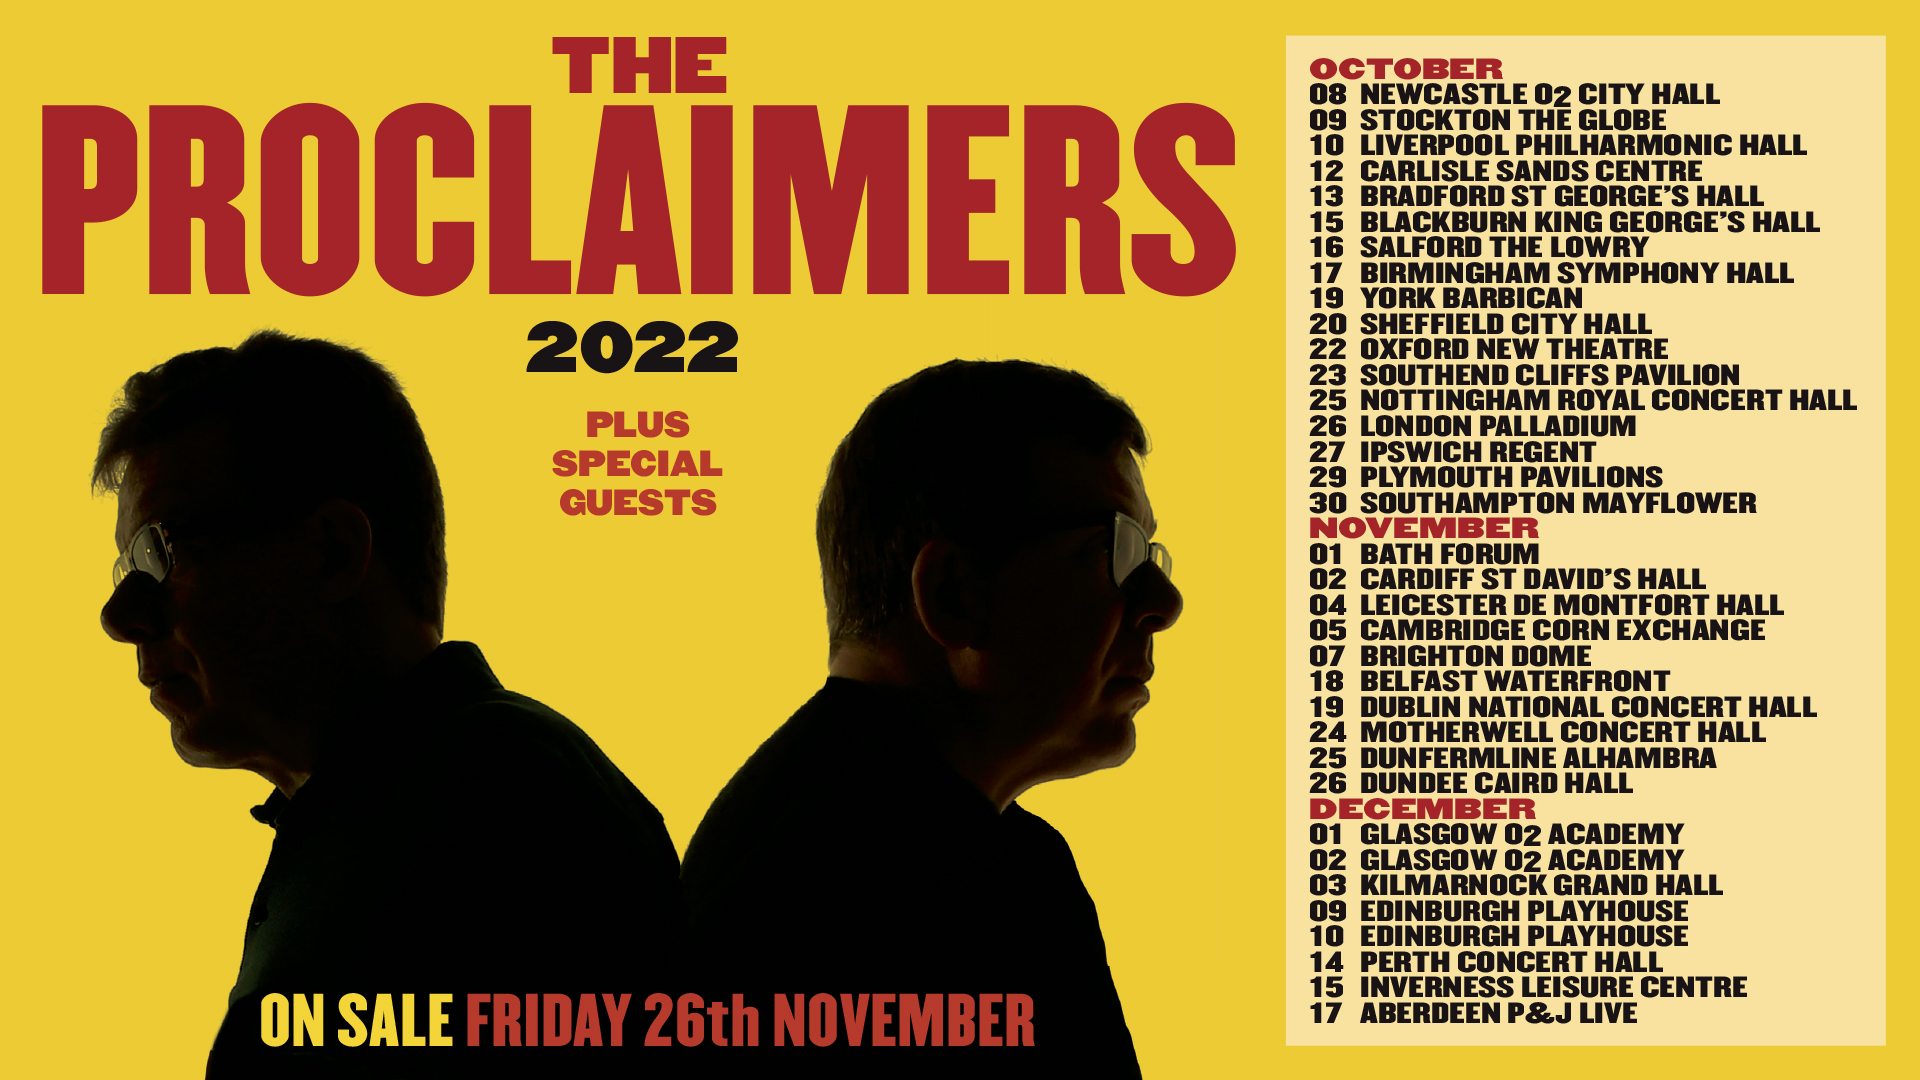 proclaimers tour 2022 edinburgh